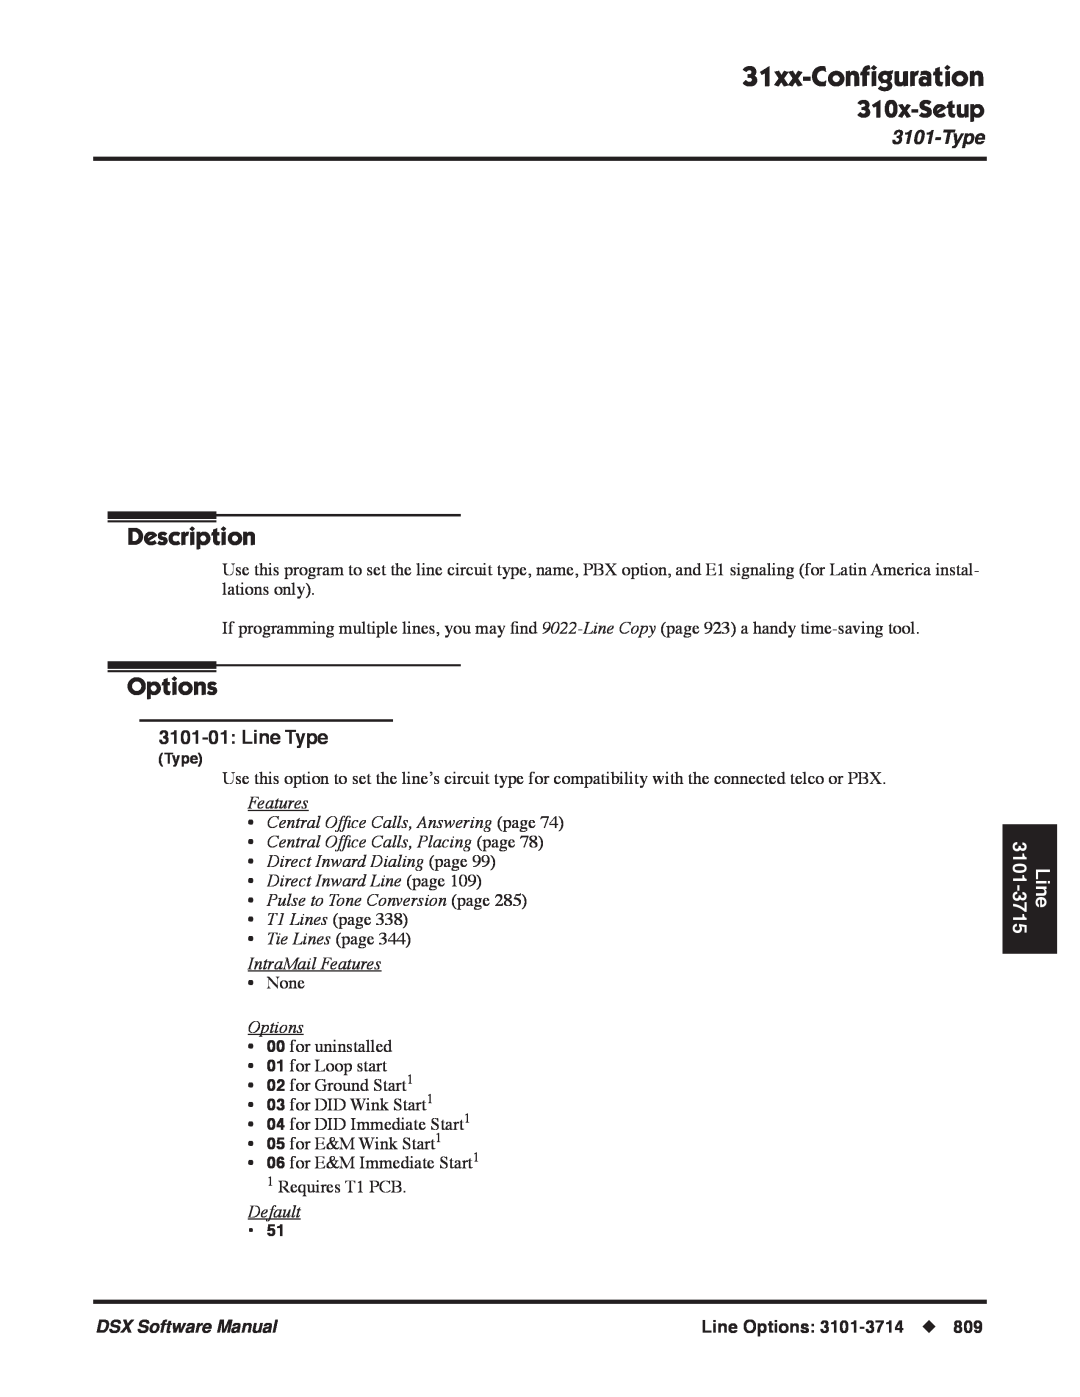 NEC P Lines, 31xx-Conﬁguration, 310x-Setup, Description, Options, 3101-01:Line Type, Direct Inward Dialing page 